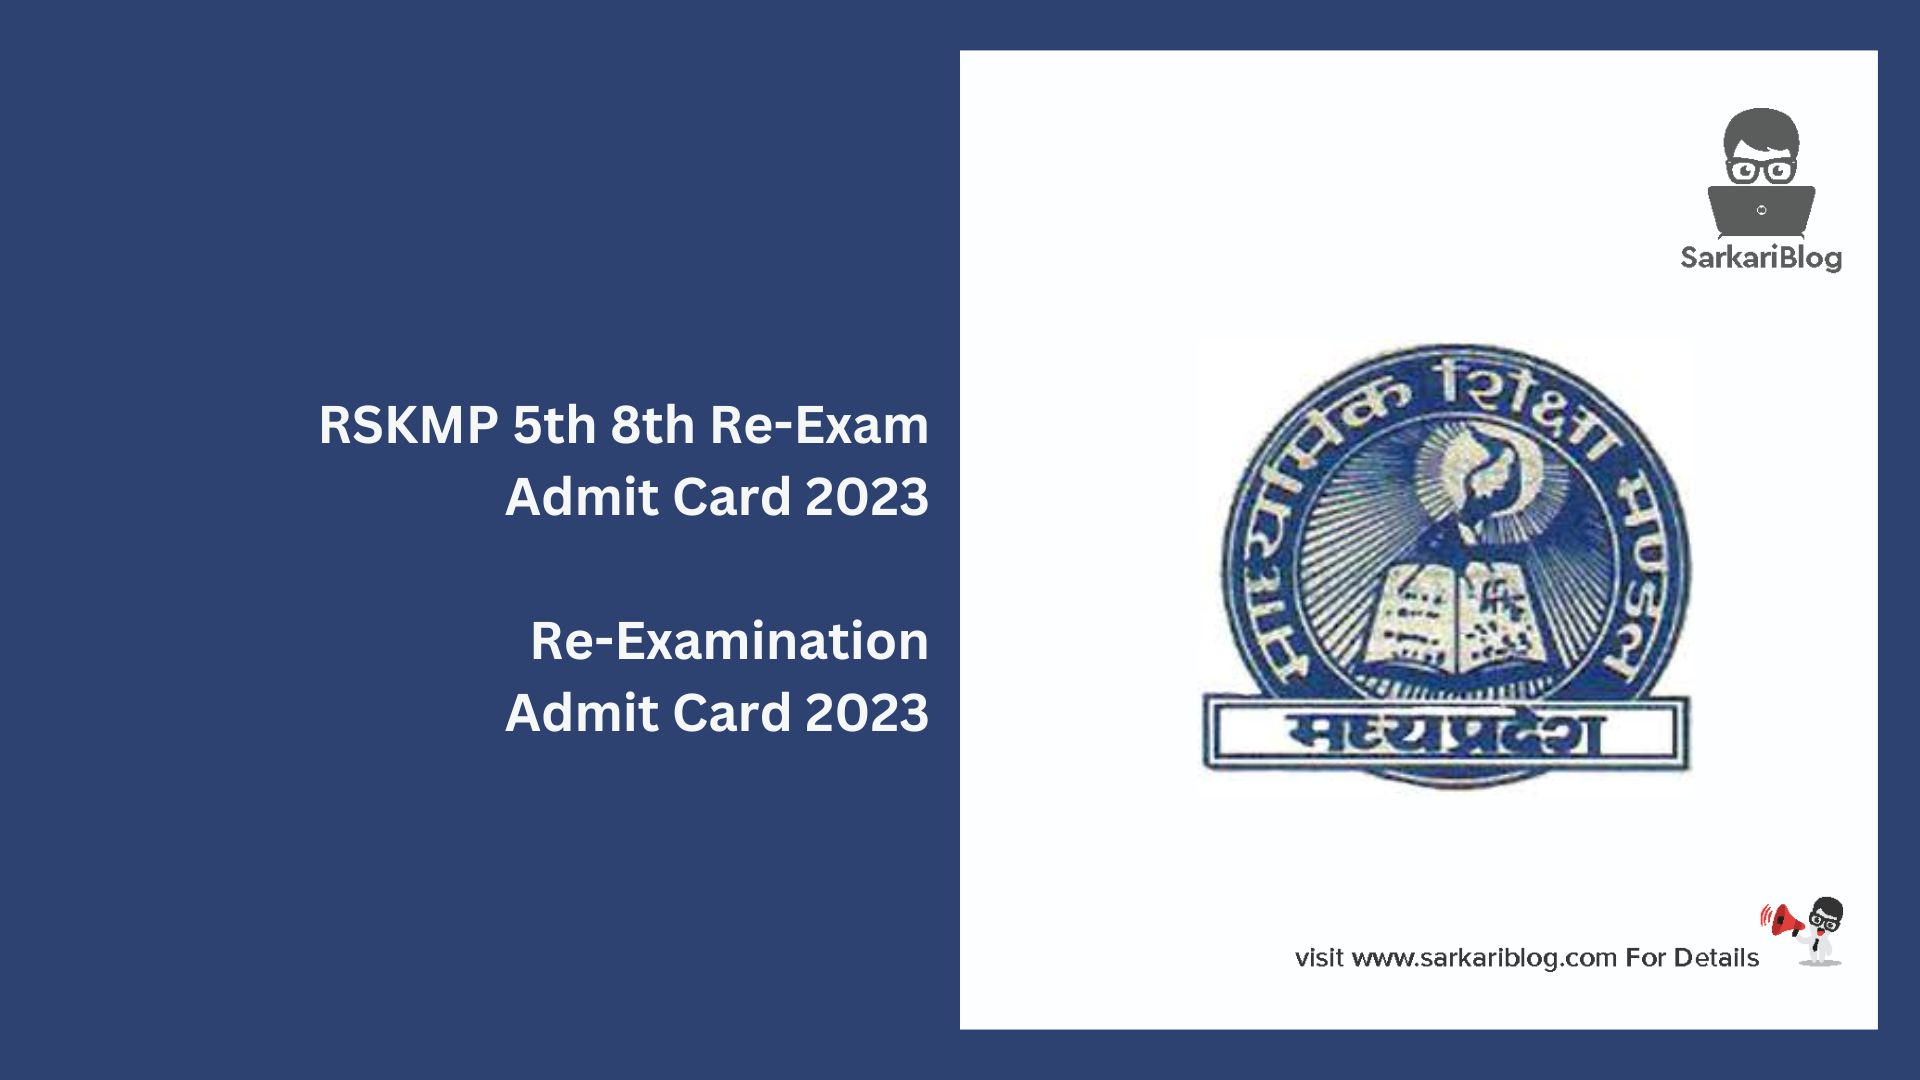 RSKMP 5th 8th Re-Exam Admit Card 2023